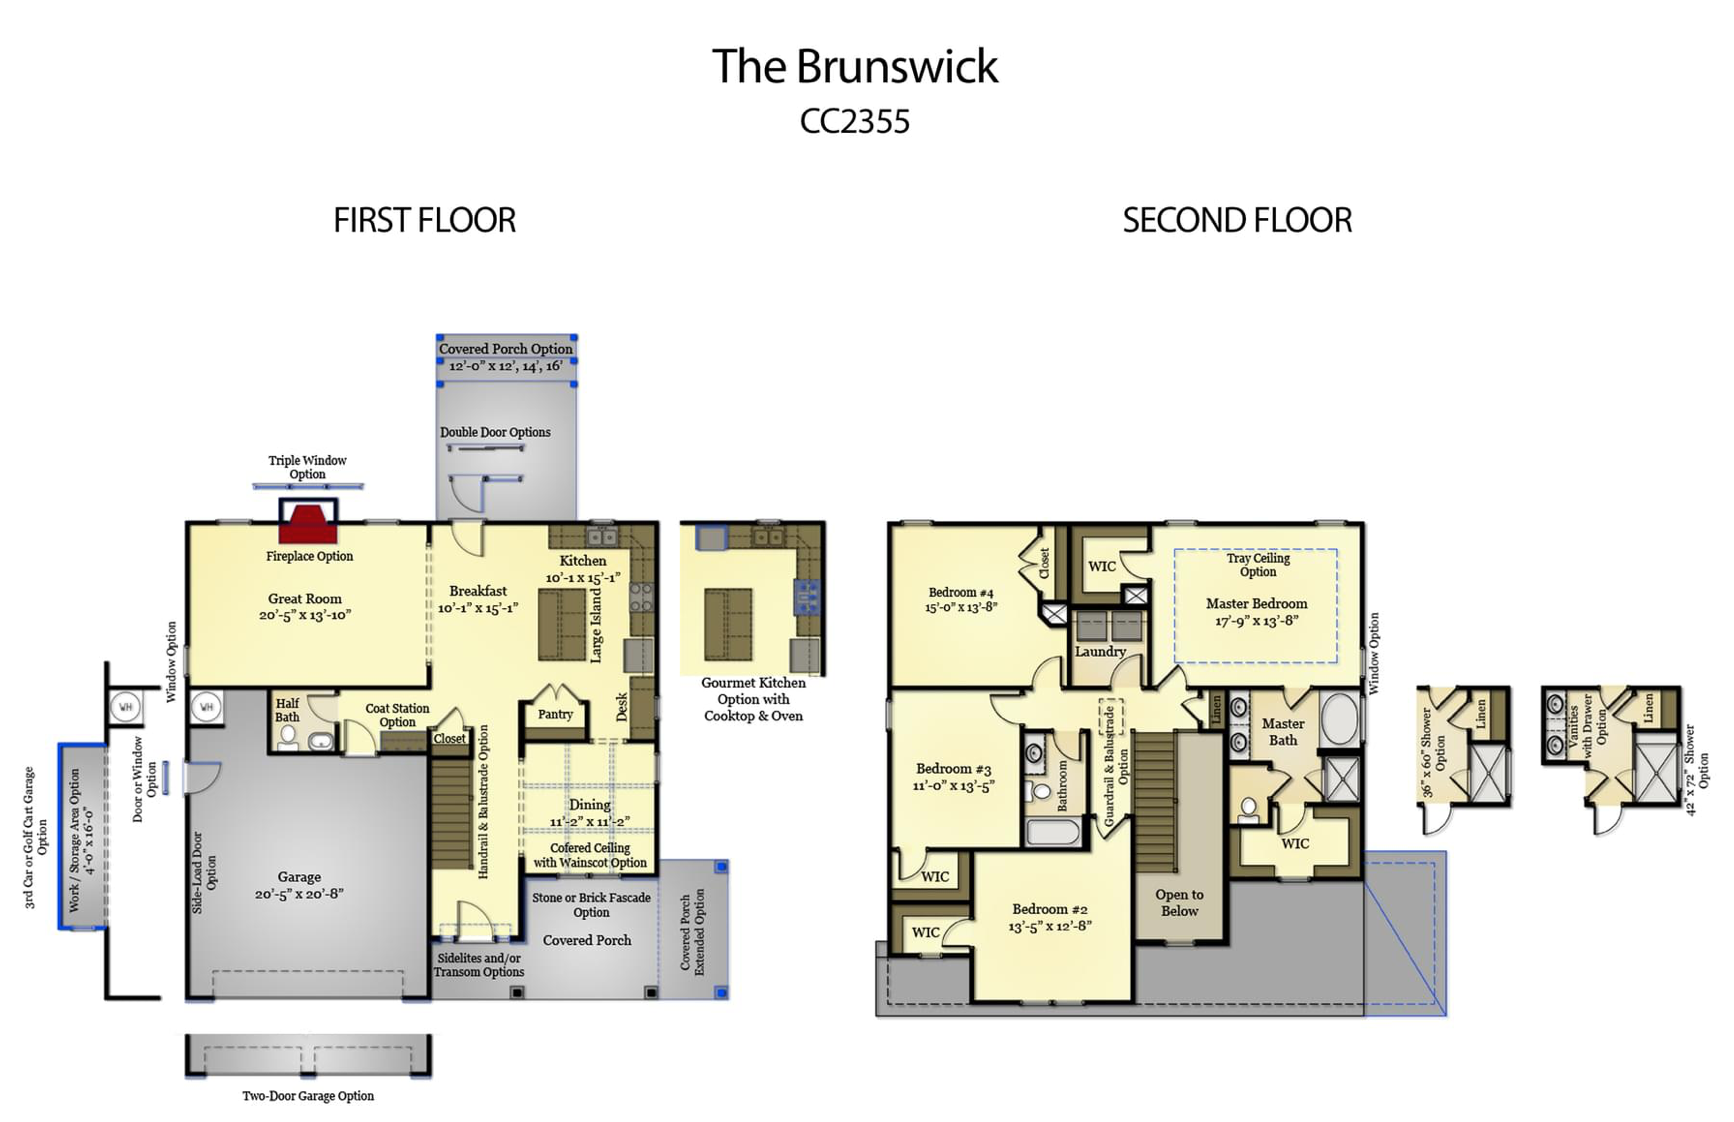 The Brunswick CC floor plan image